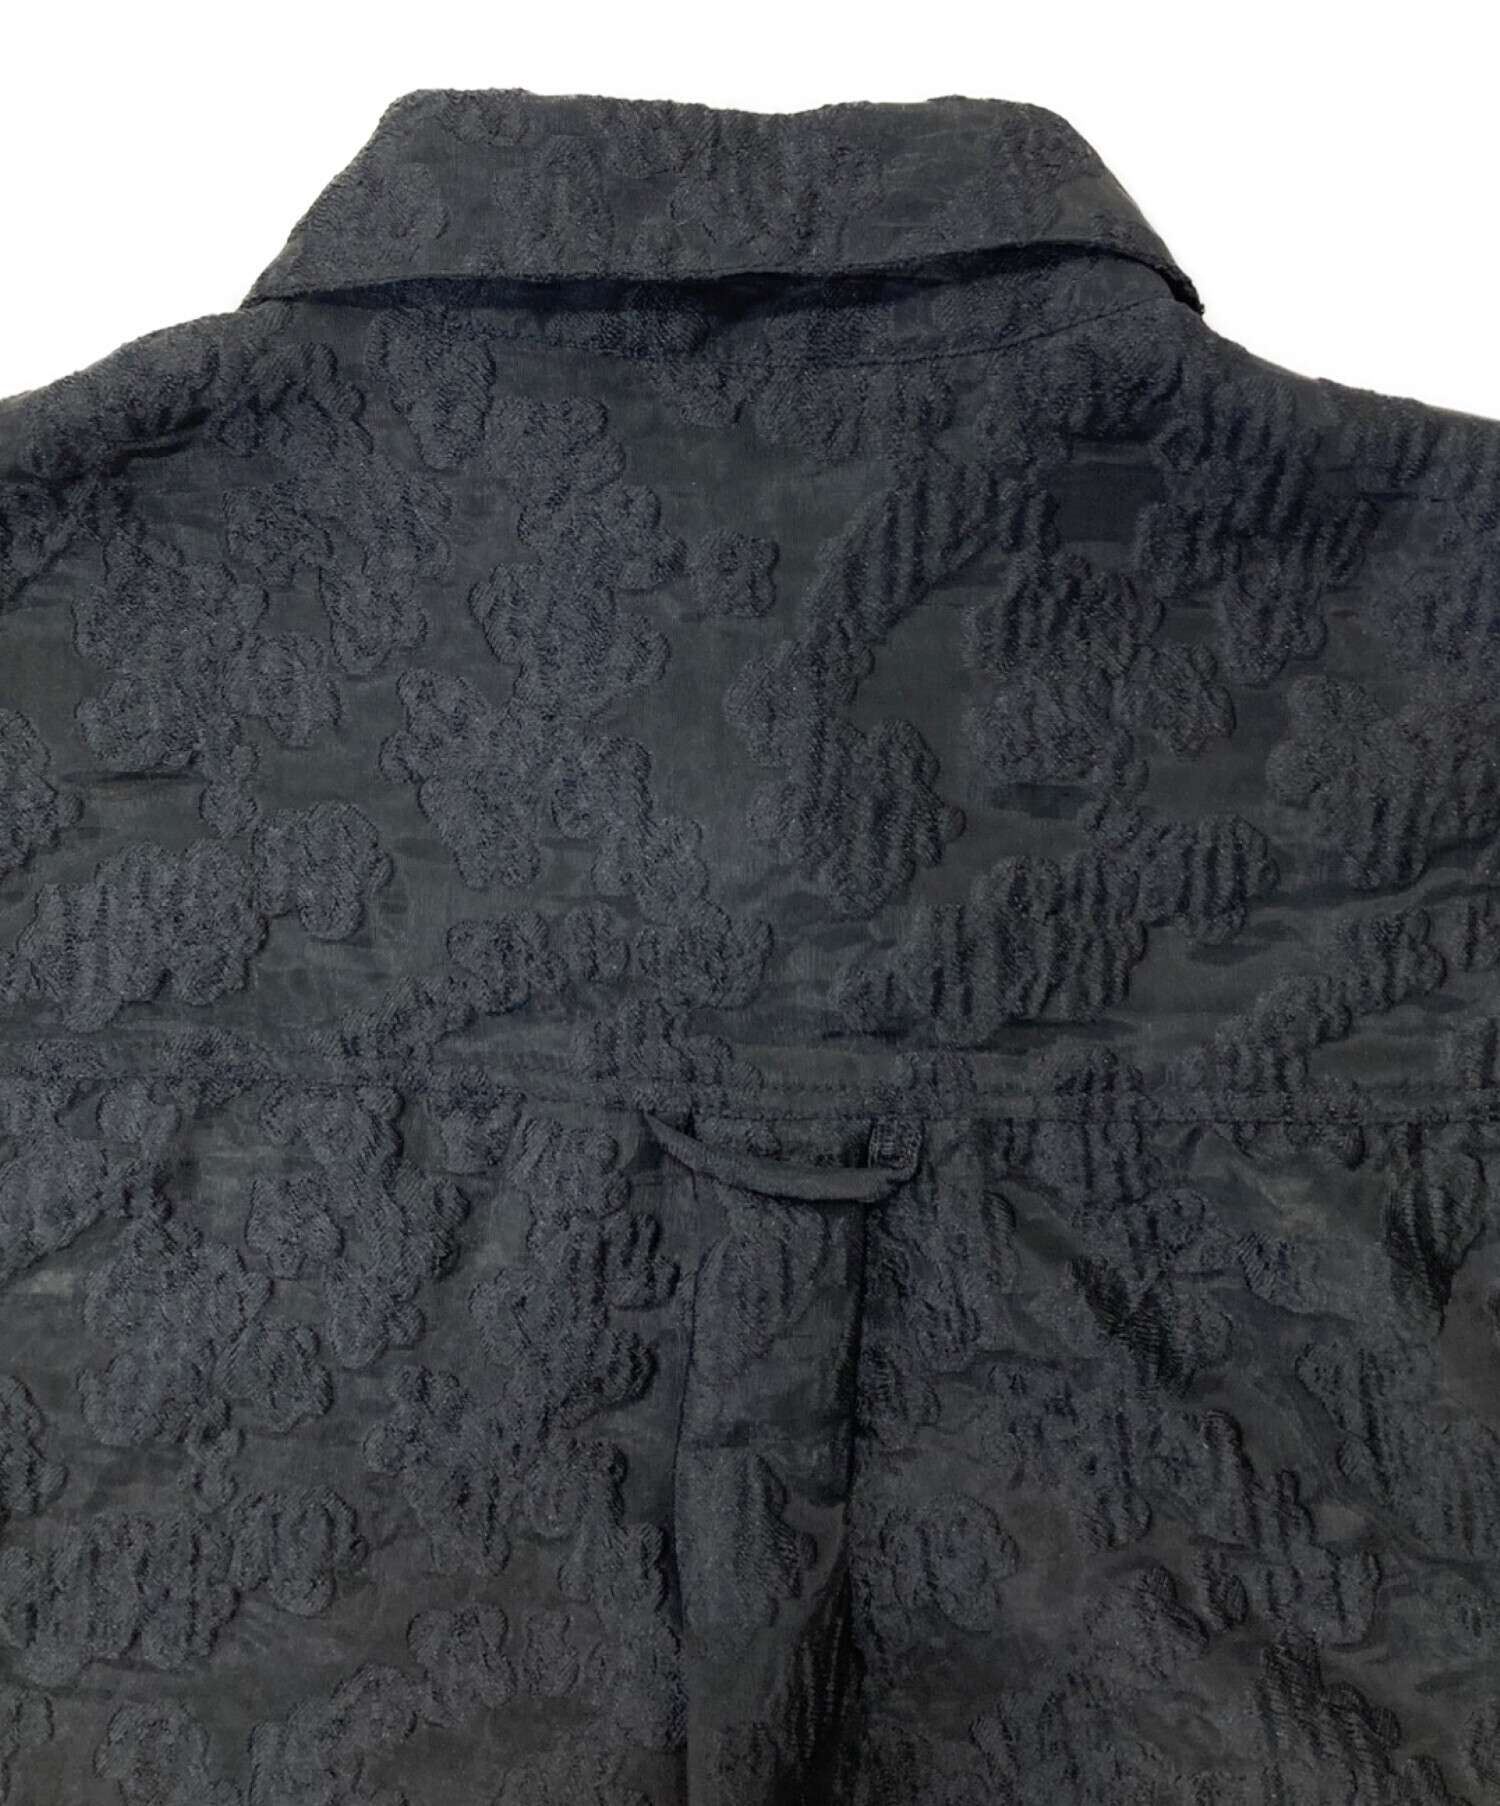 sahara (サハラ) Embroidery Sheer Shirt ブラック サイズ:表記なし